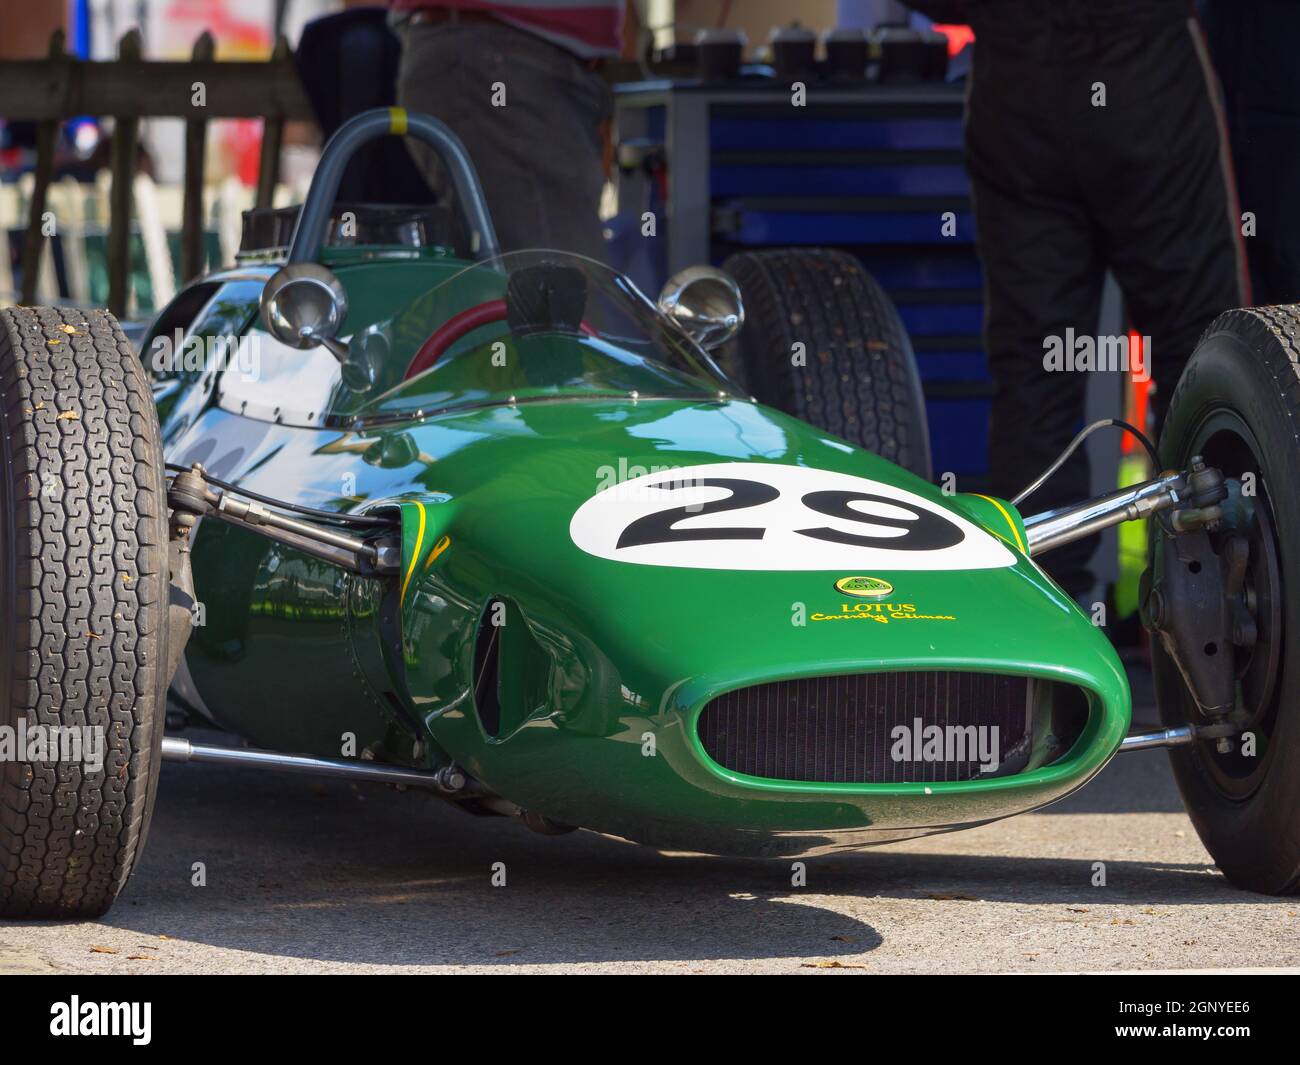 1962 Lotus-Climax 25, at Goodwood motor circuit 2021 Stock Photo